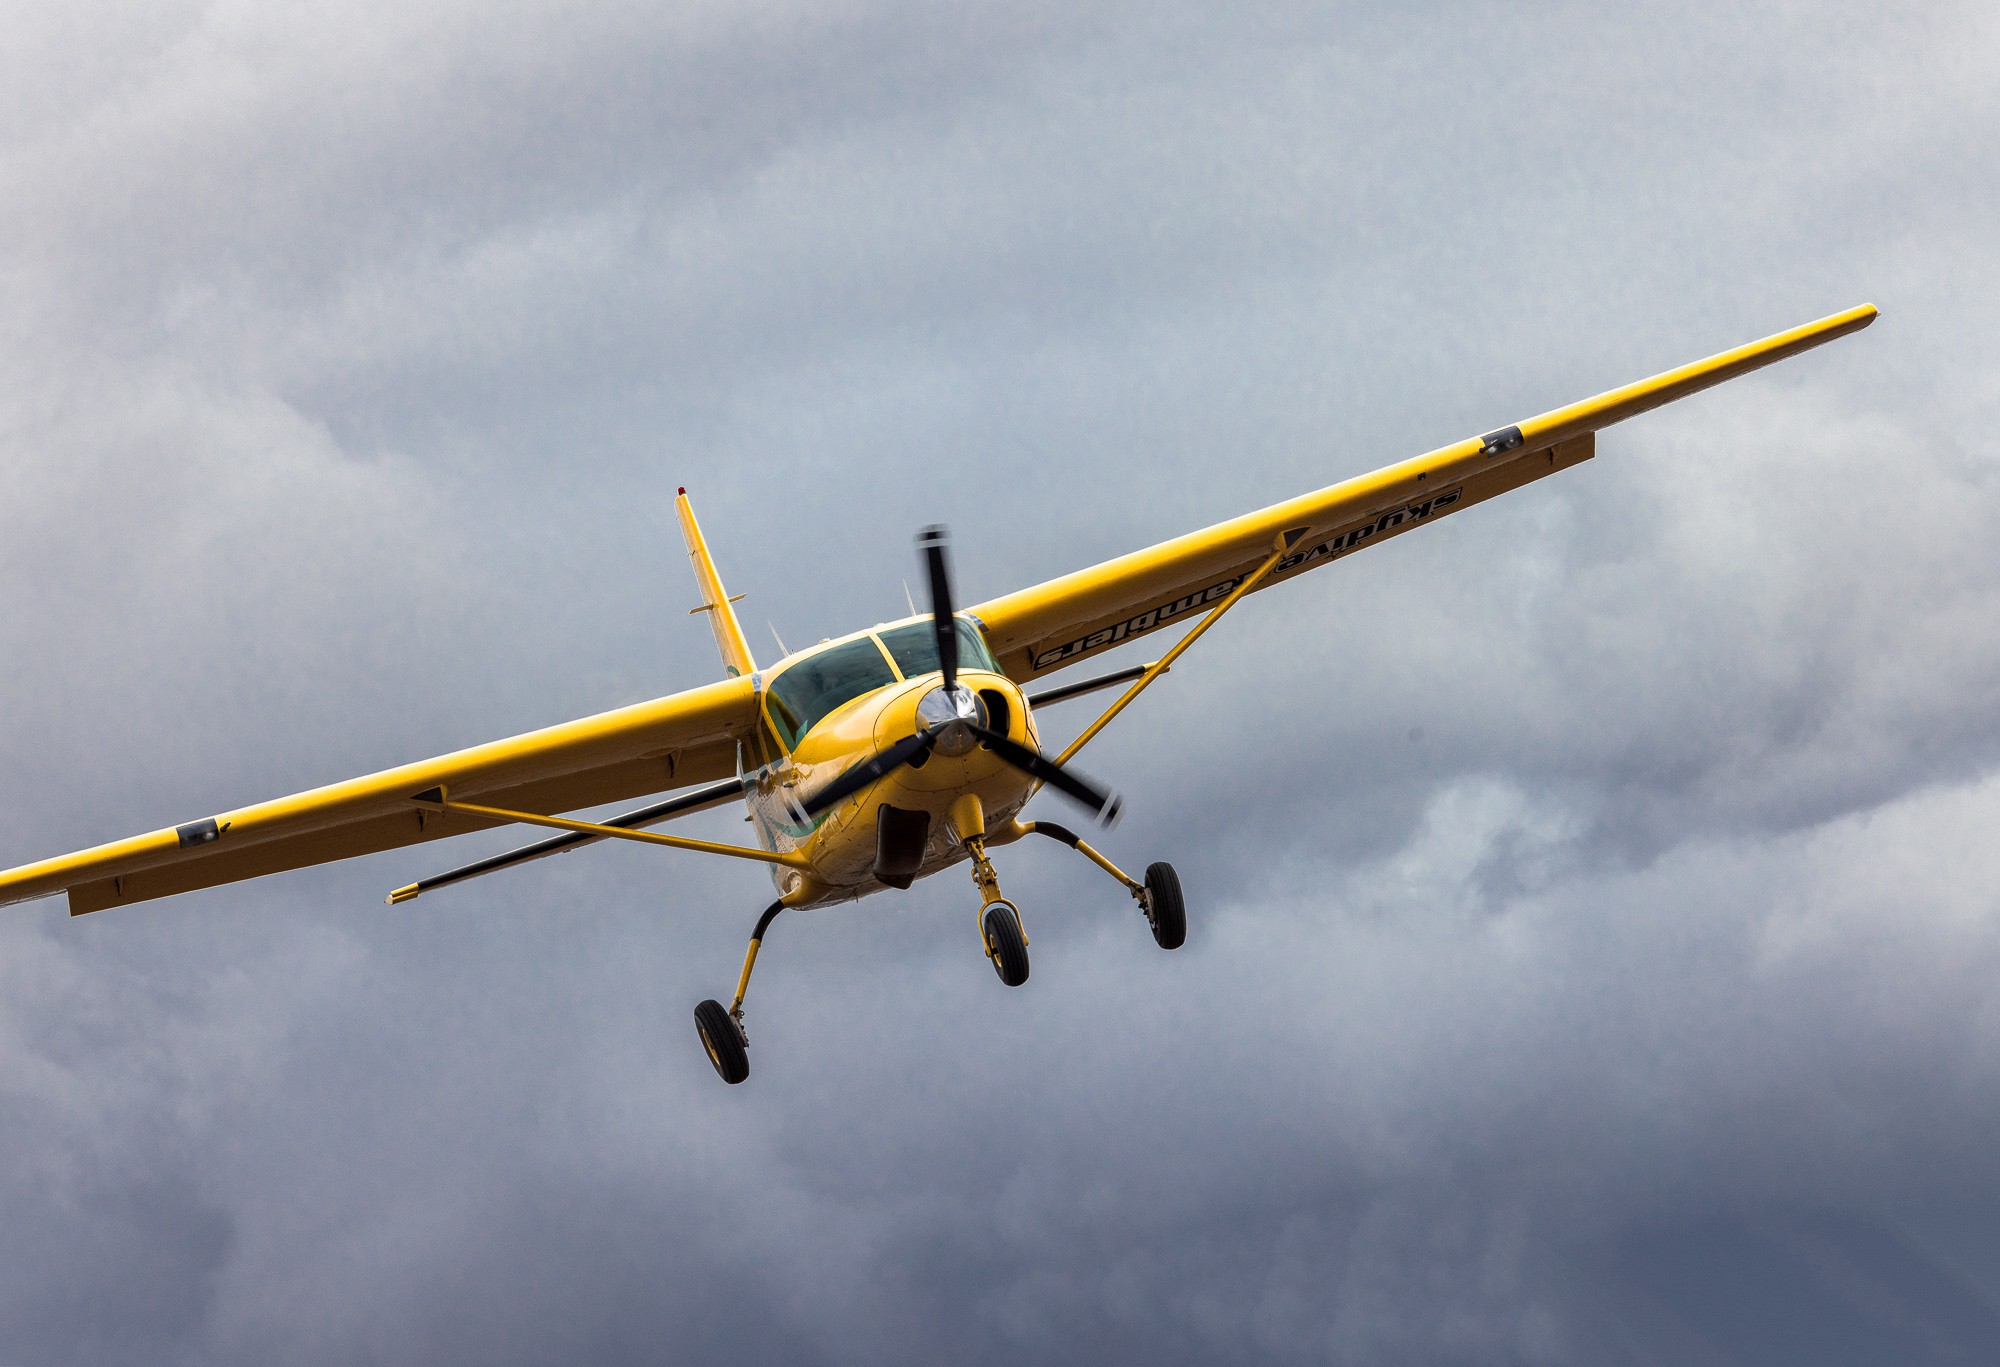 Skydiving club’s jump plane (Cessna Caravan) returning to rural airstrip.